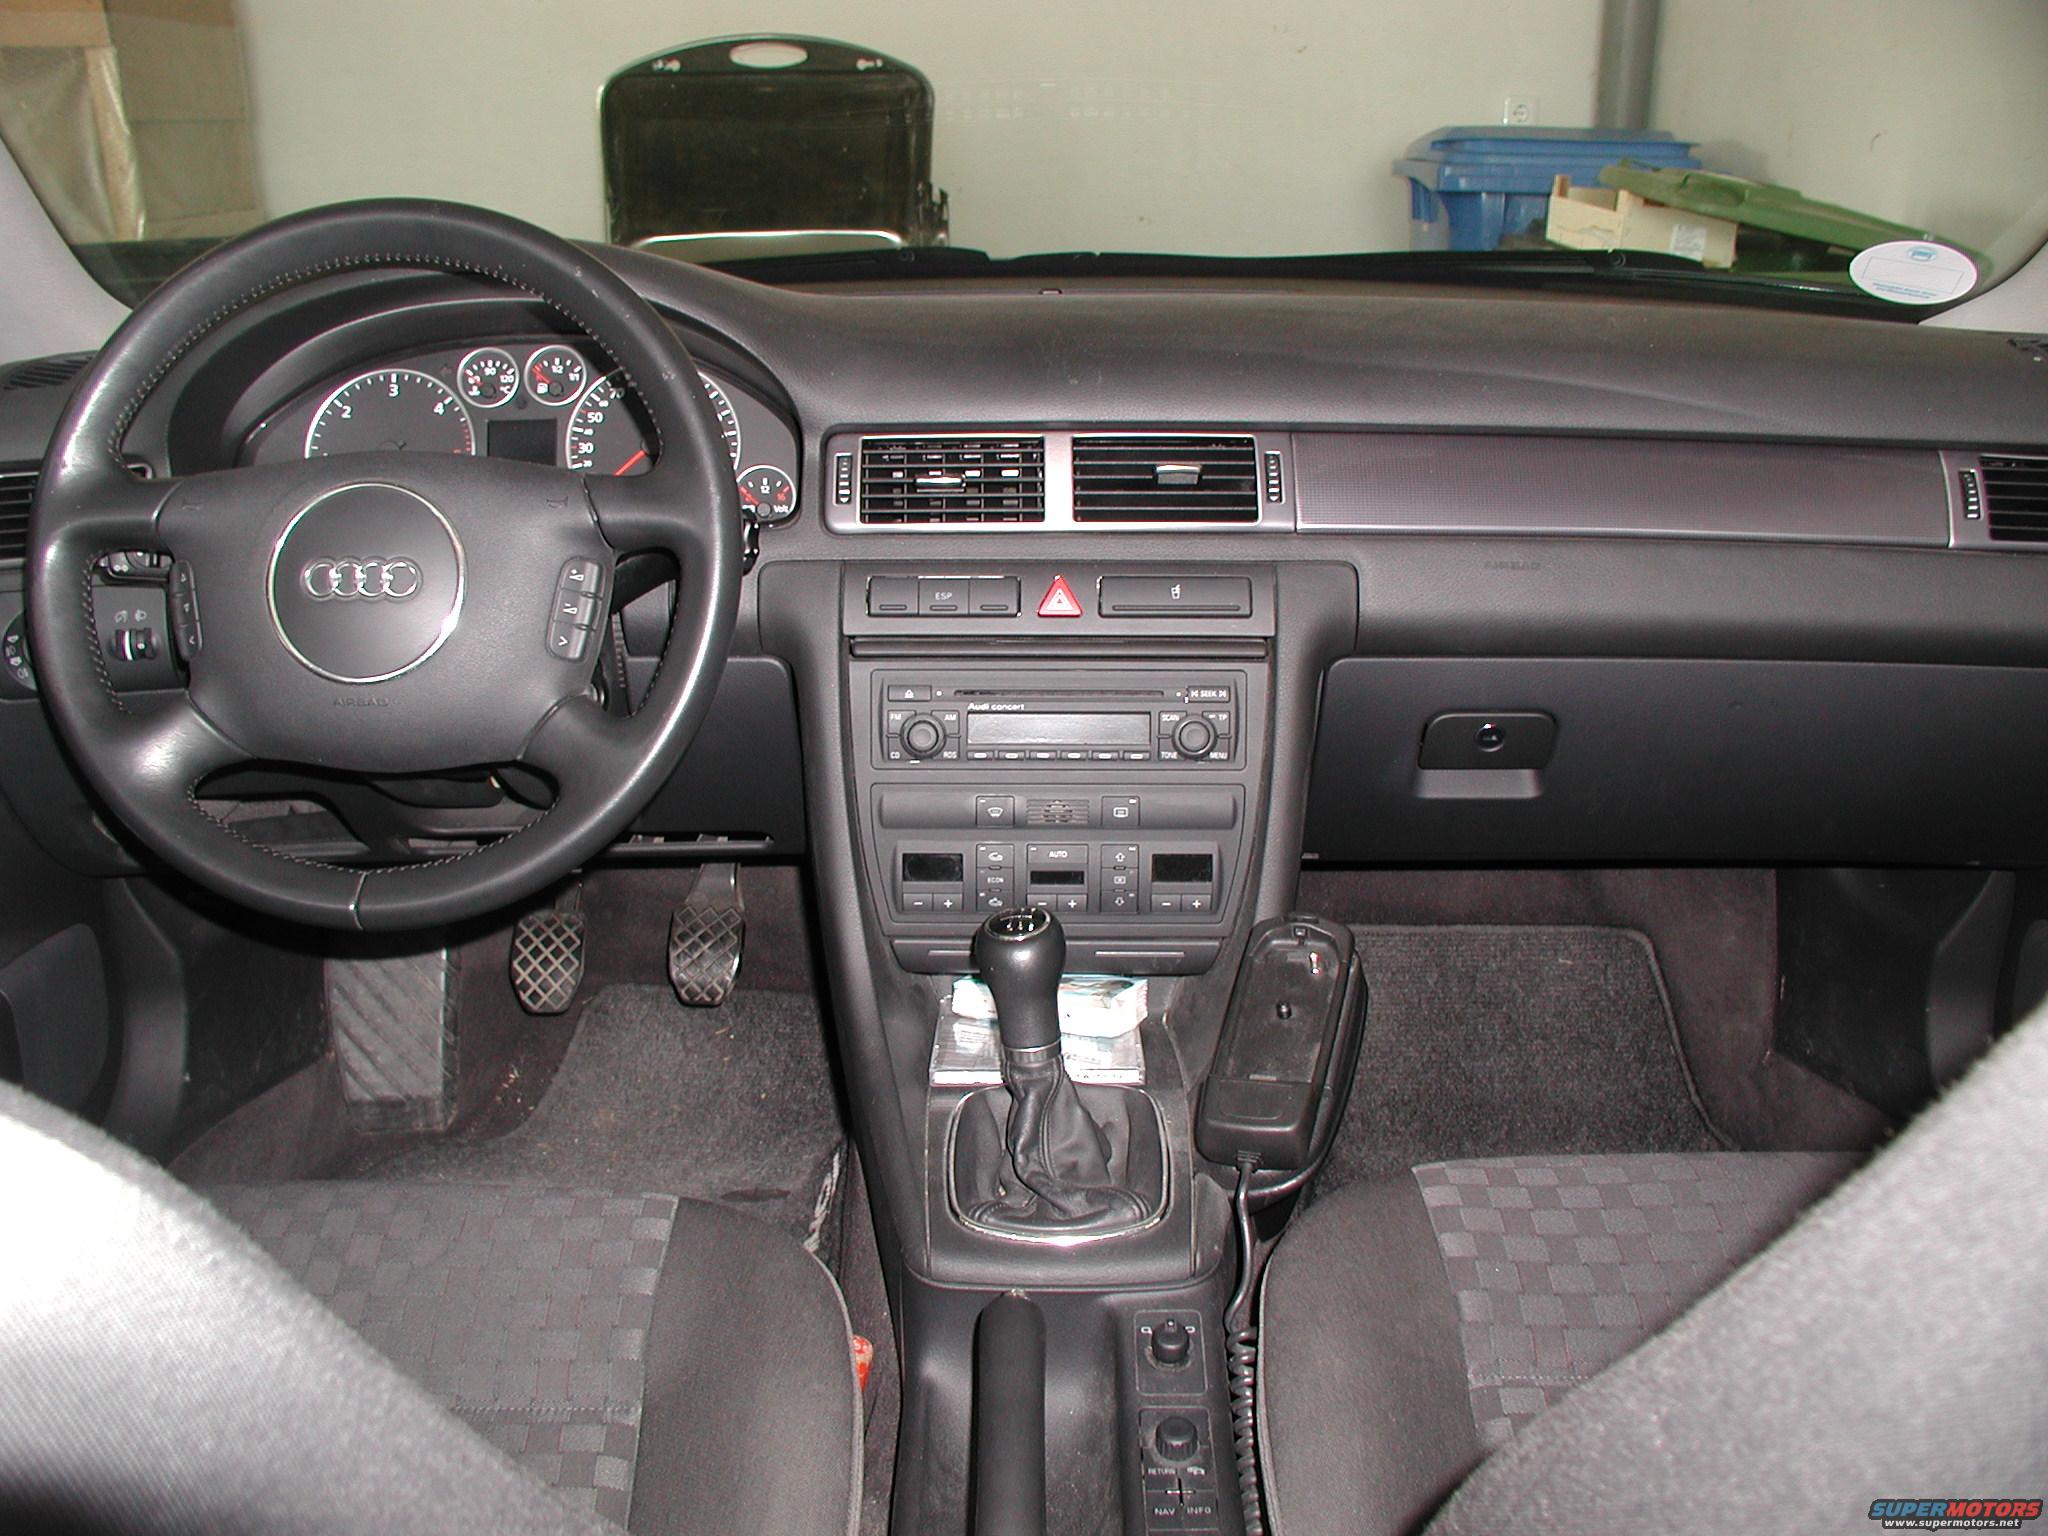 2003 Audi A6 Interior picture | SuperMotors.net